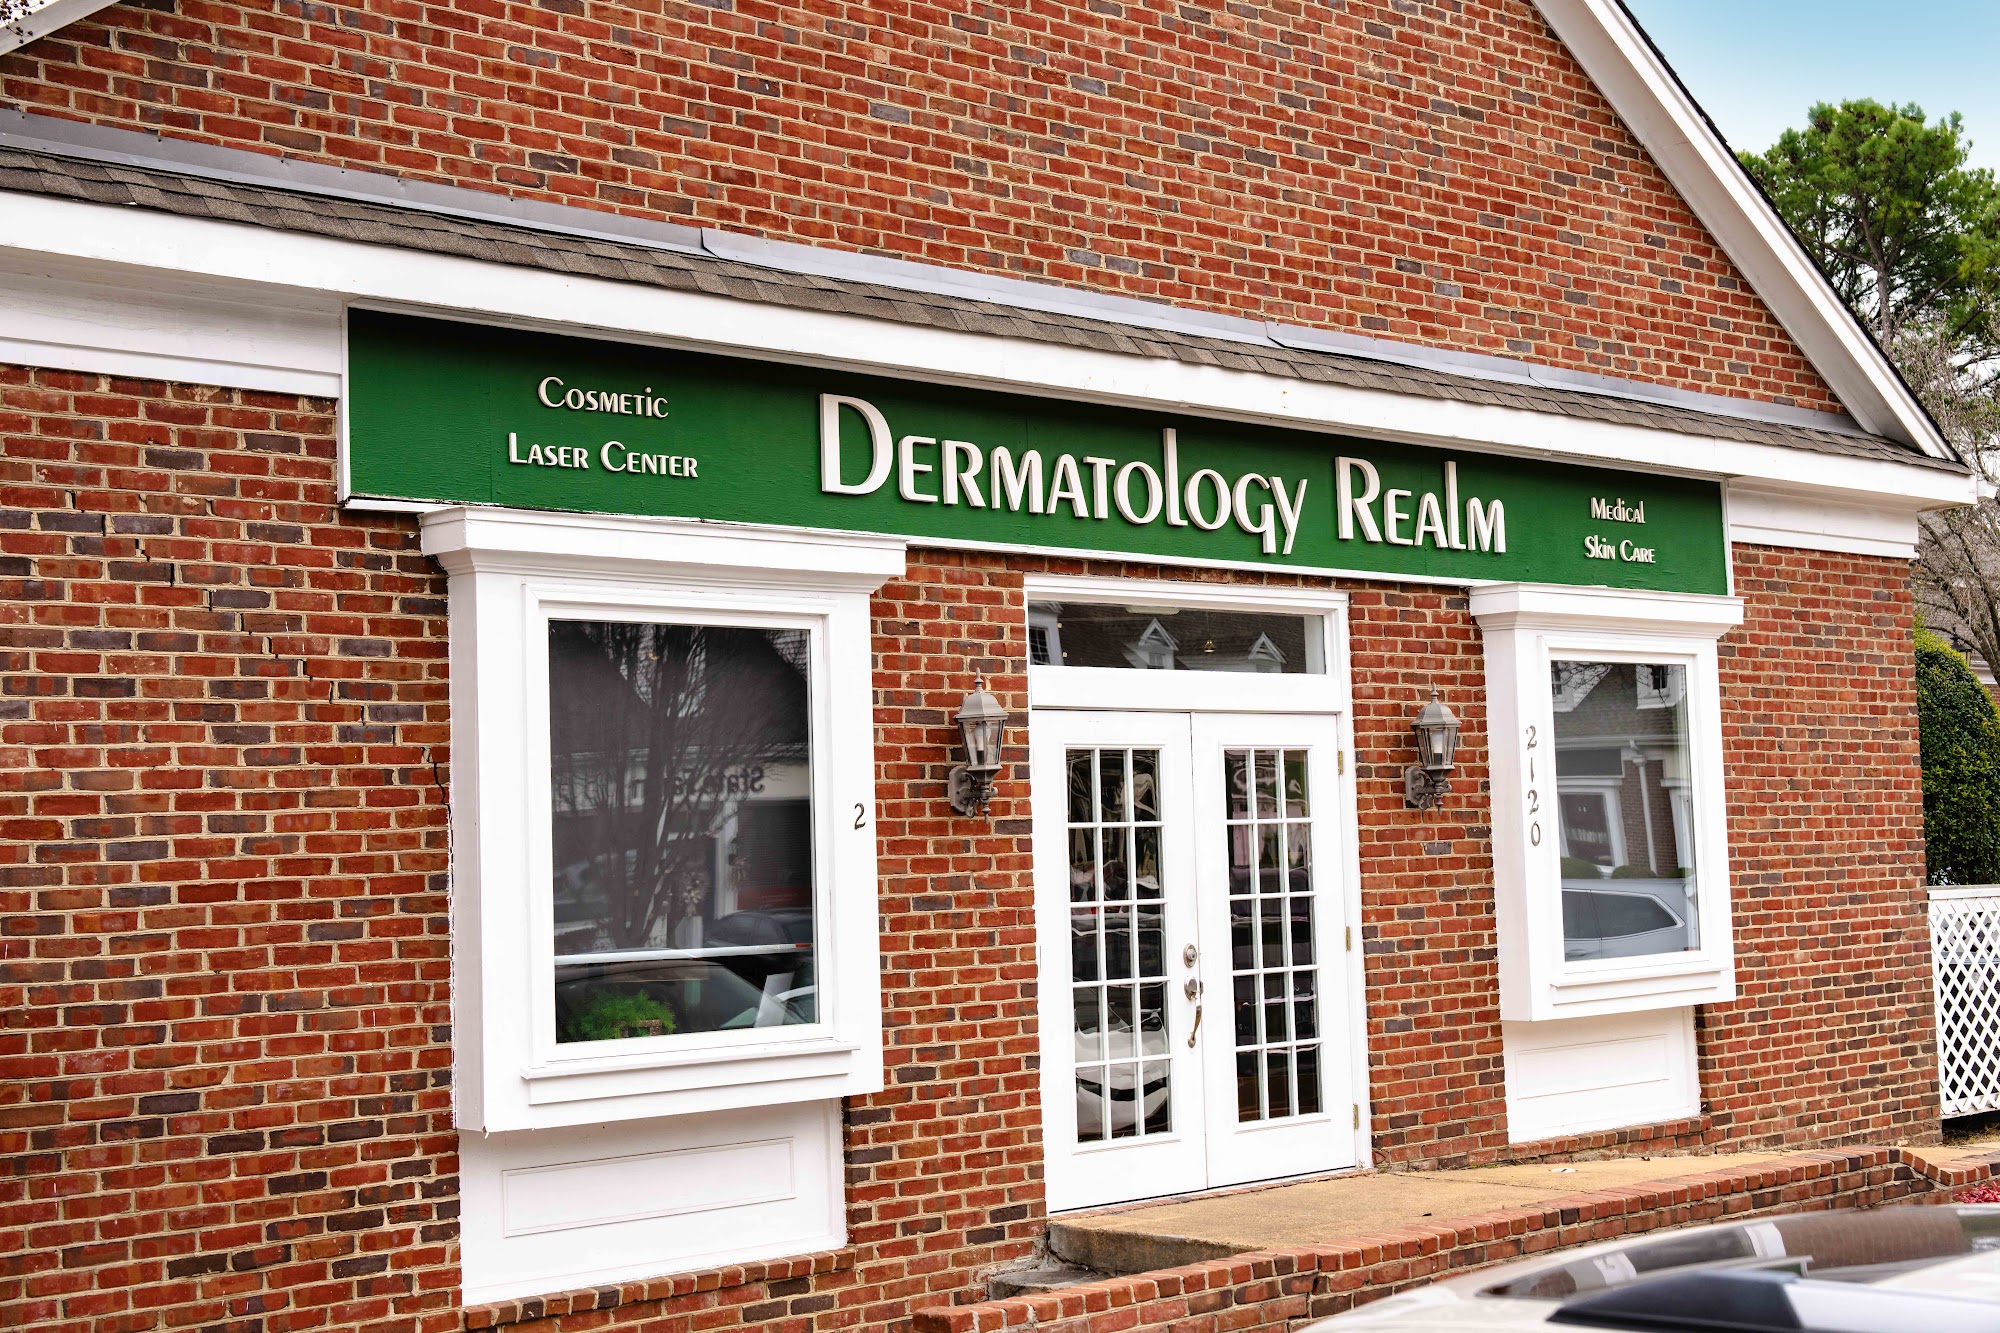 Dermatology Realm